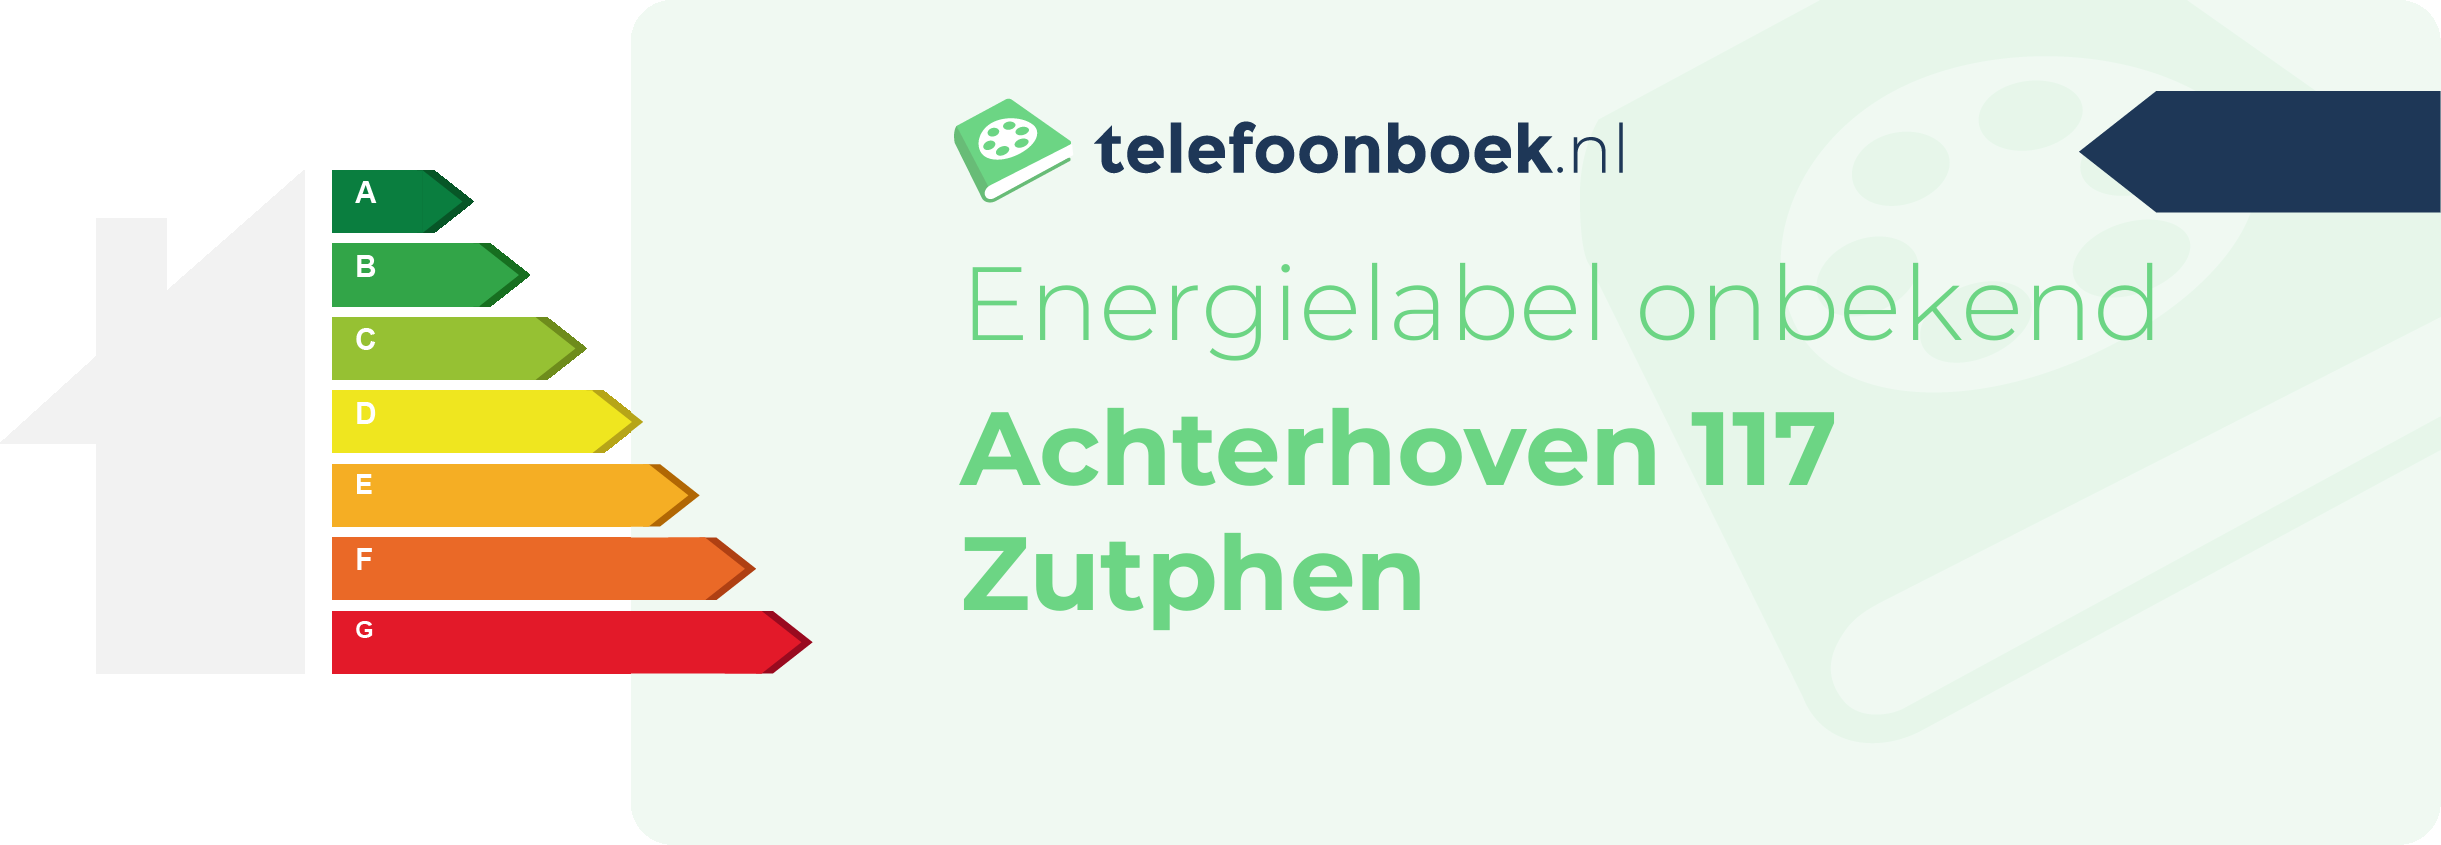 Energielabel Achterhoven 117 Zutphen